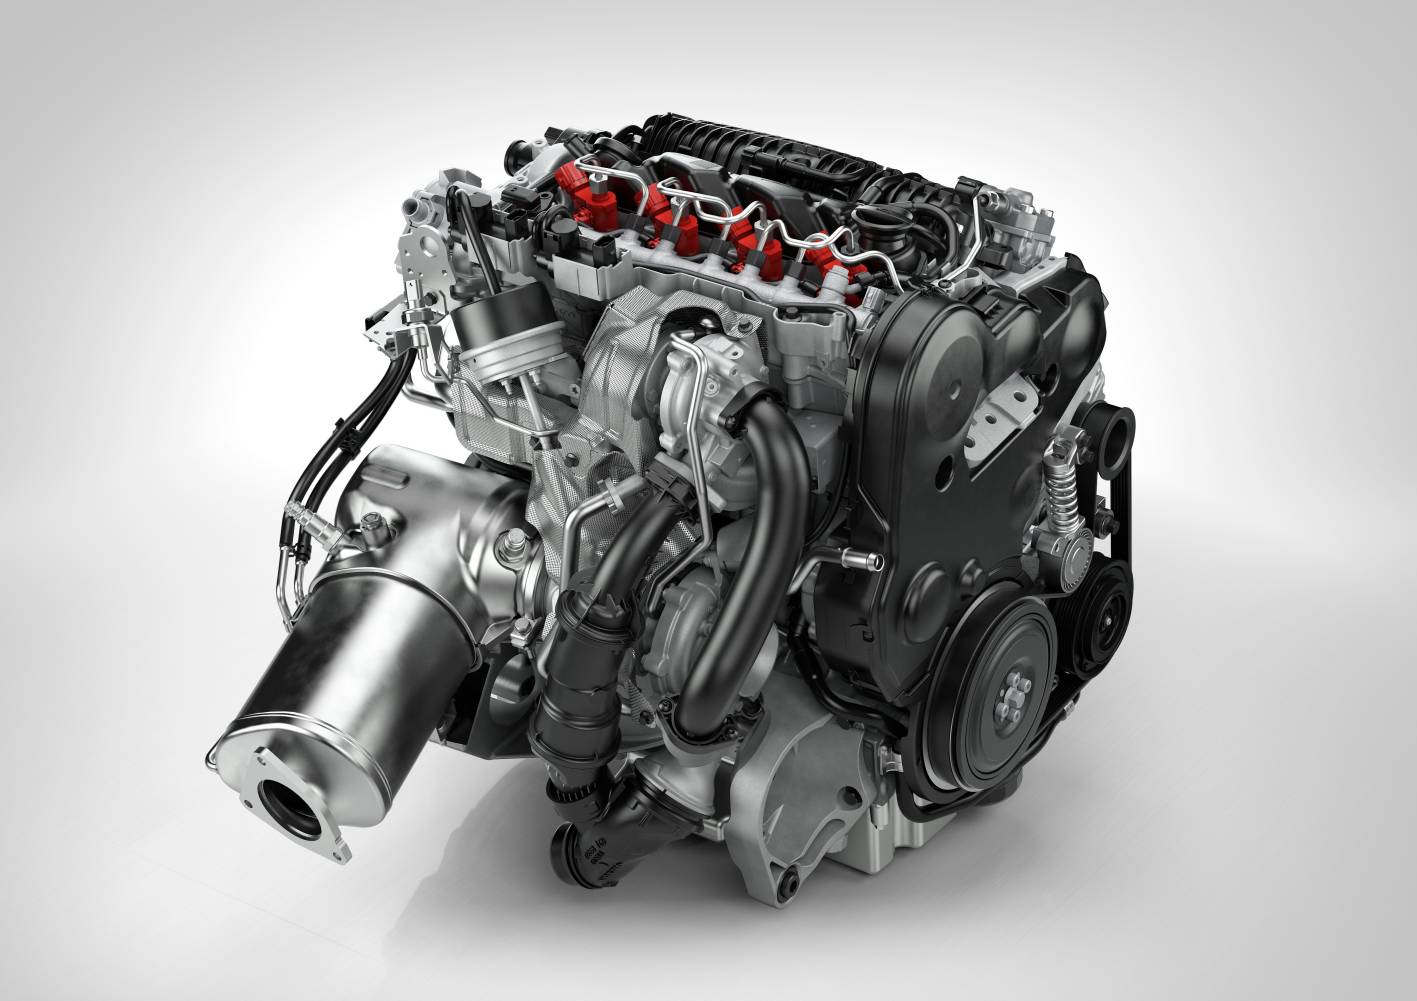 Volvo confirms DriveE threecylinder engine family